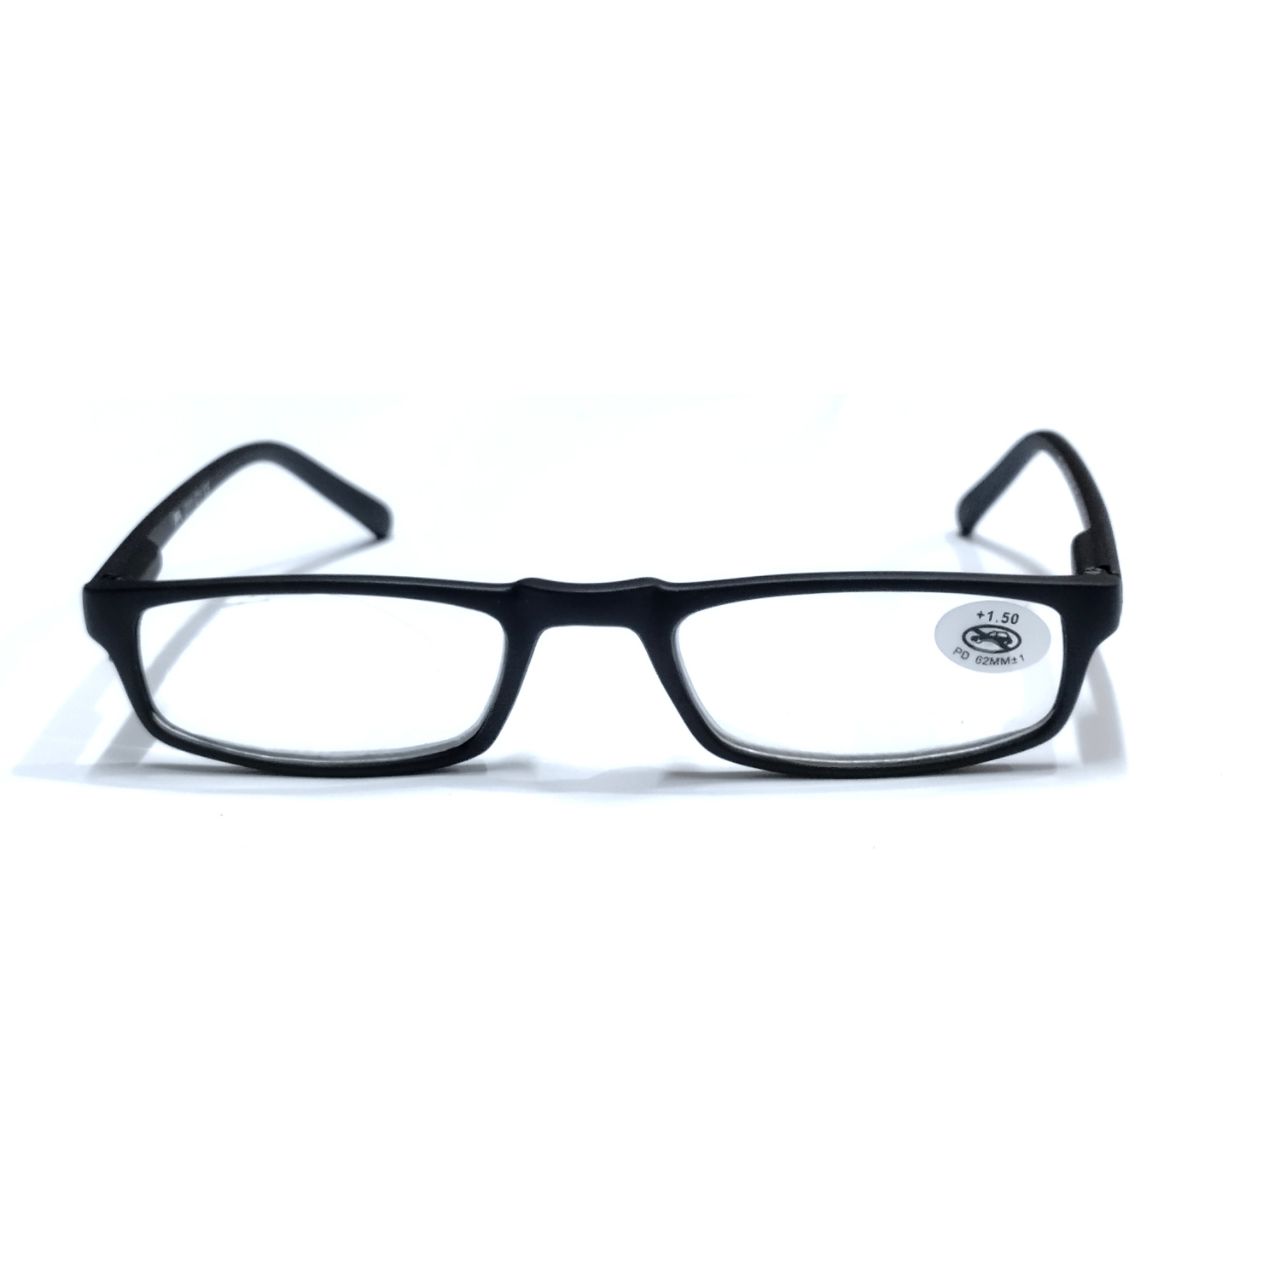 Black Computer Reading Glasses For Men with Blue Light Lenses 211mbk